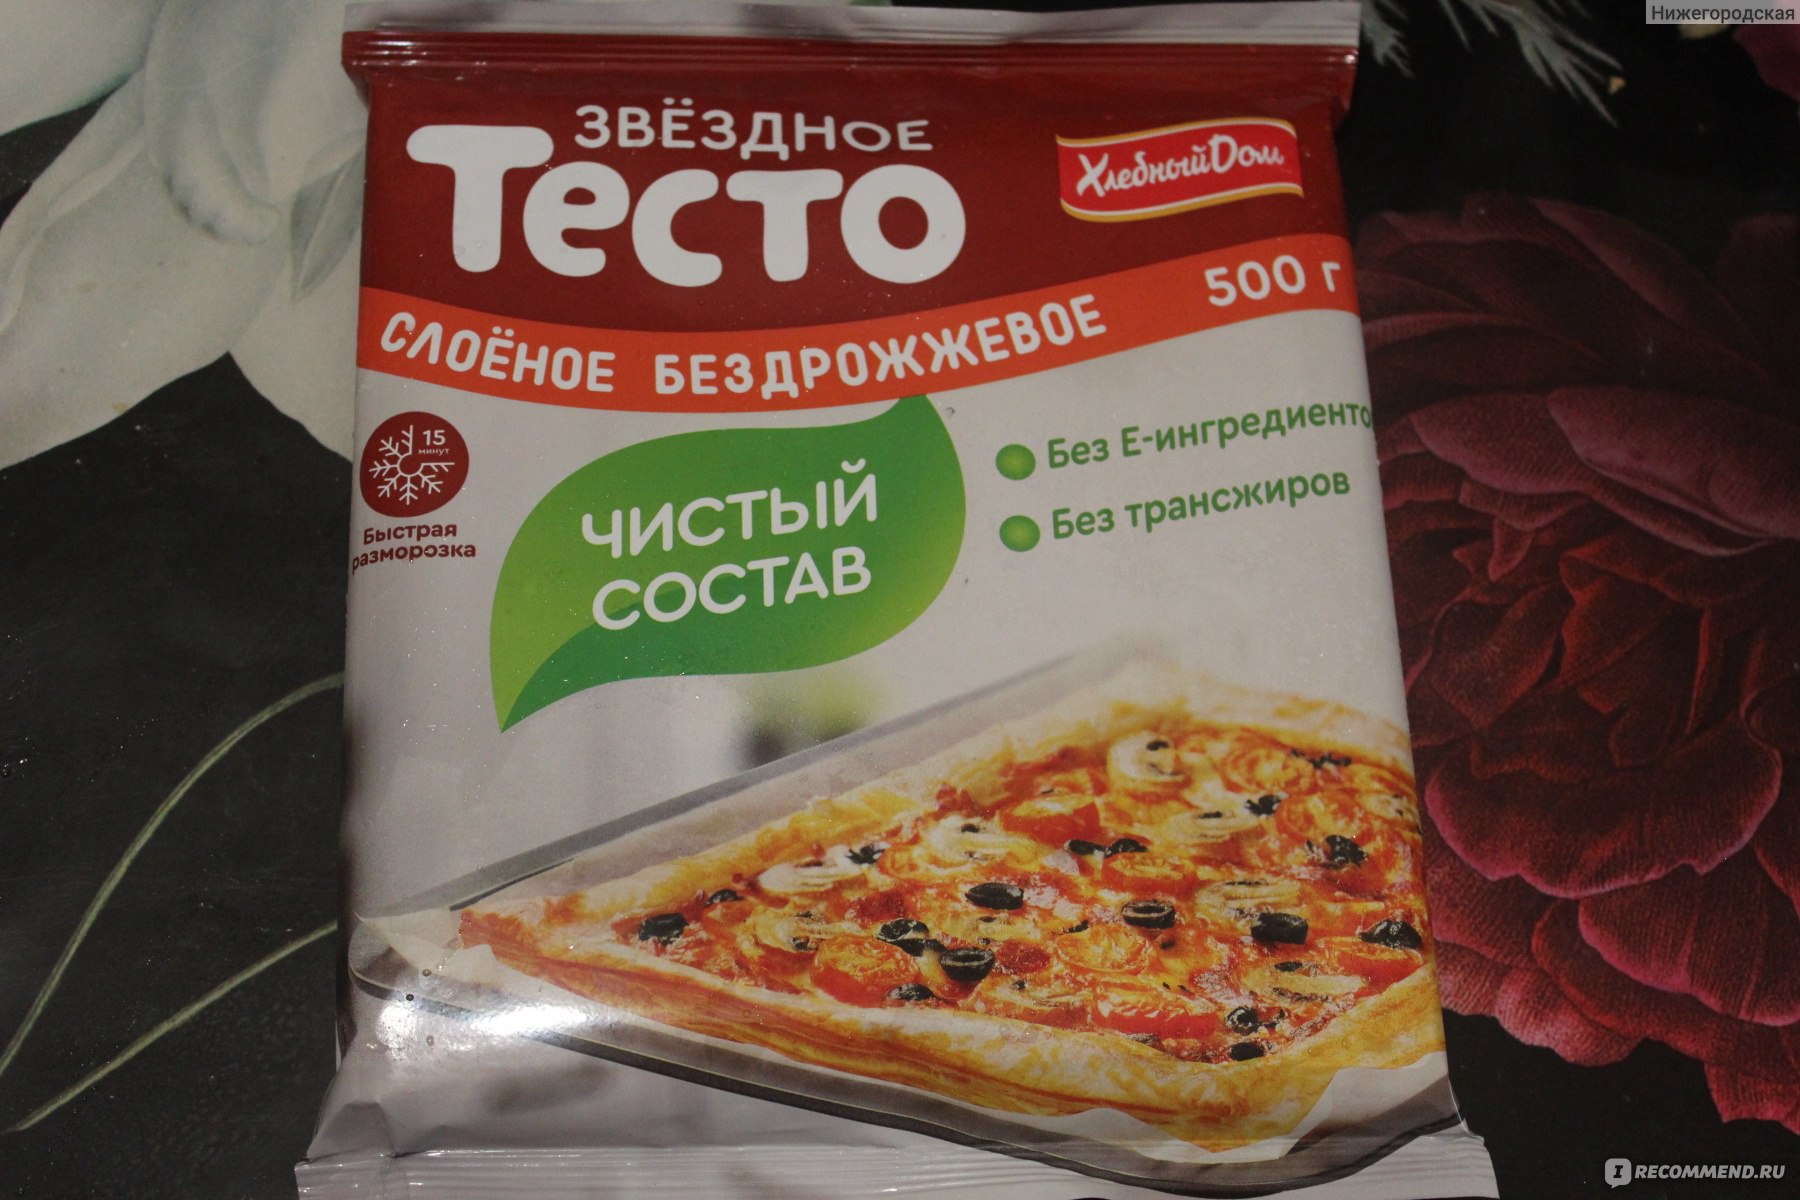 слоеное тесто морозко бездрожжевое пицца фото 114